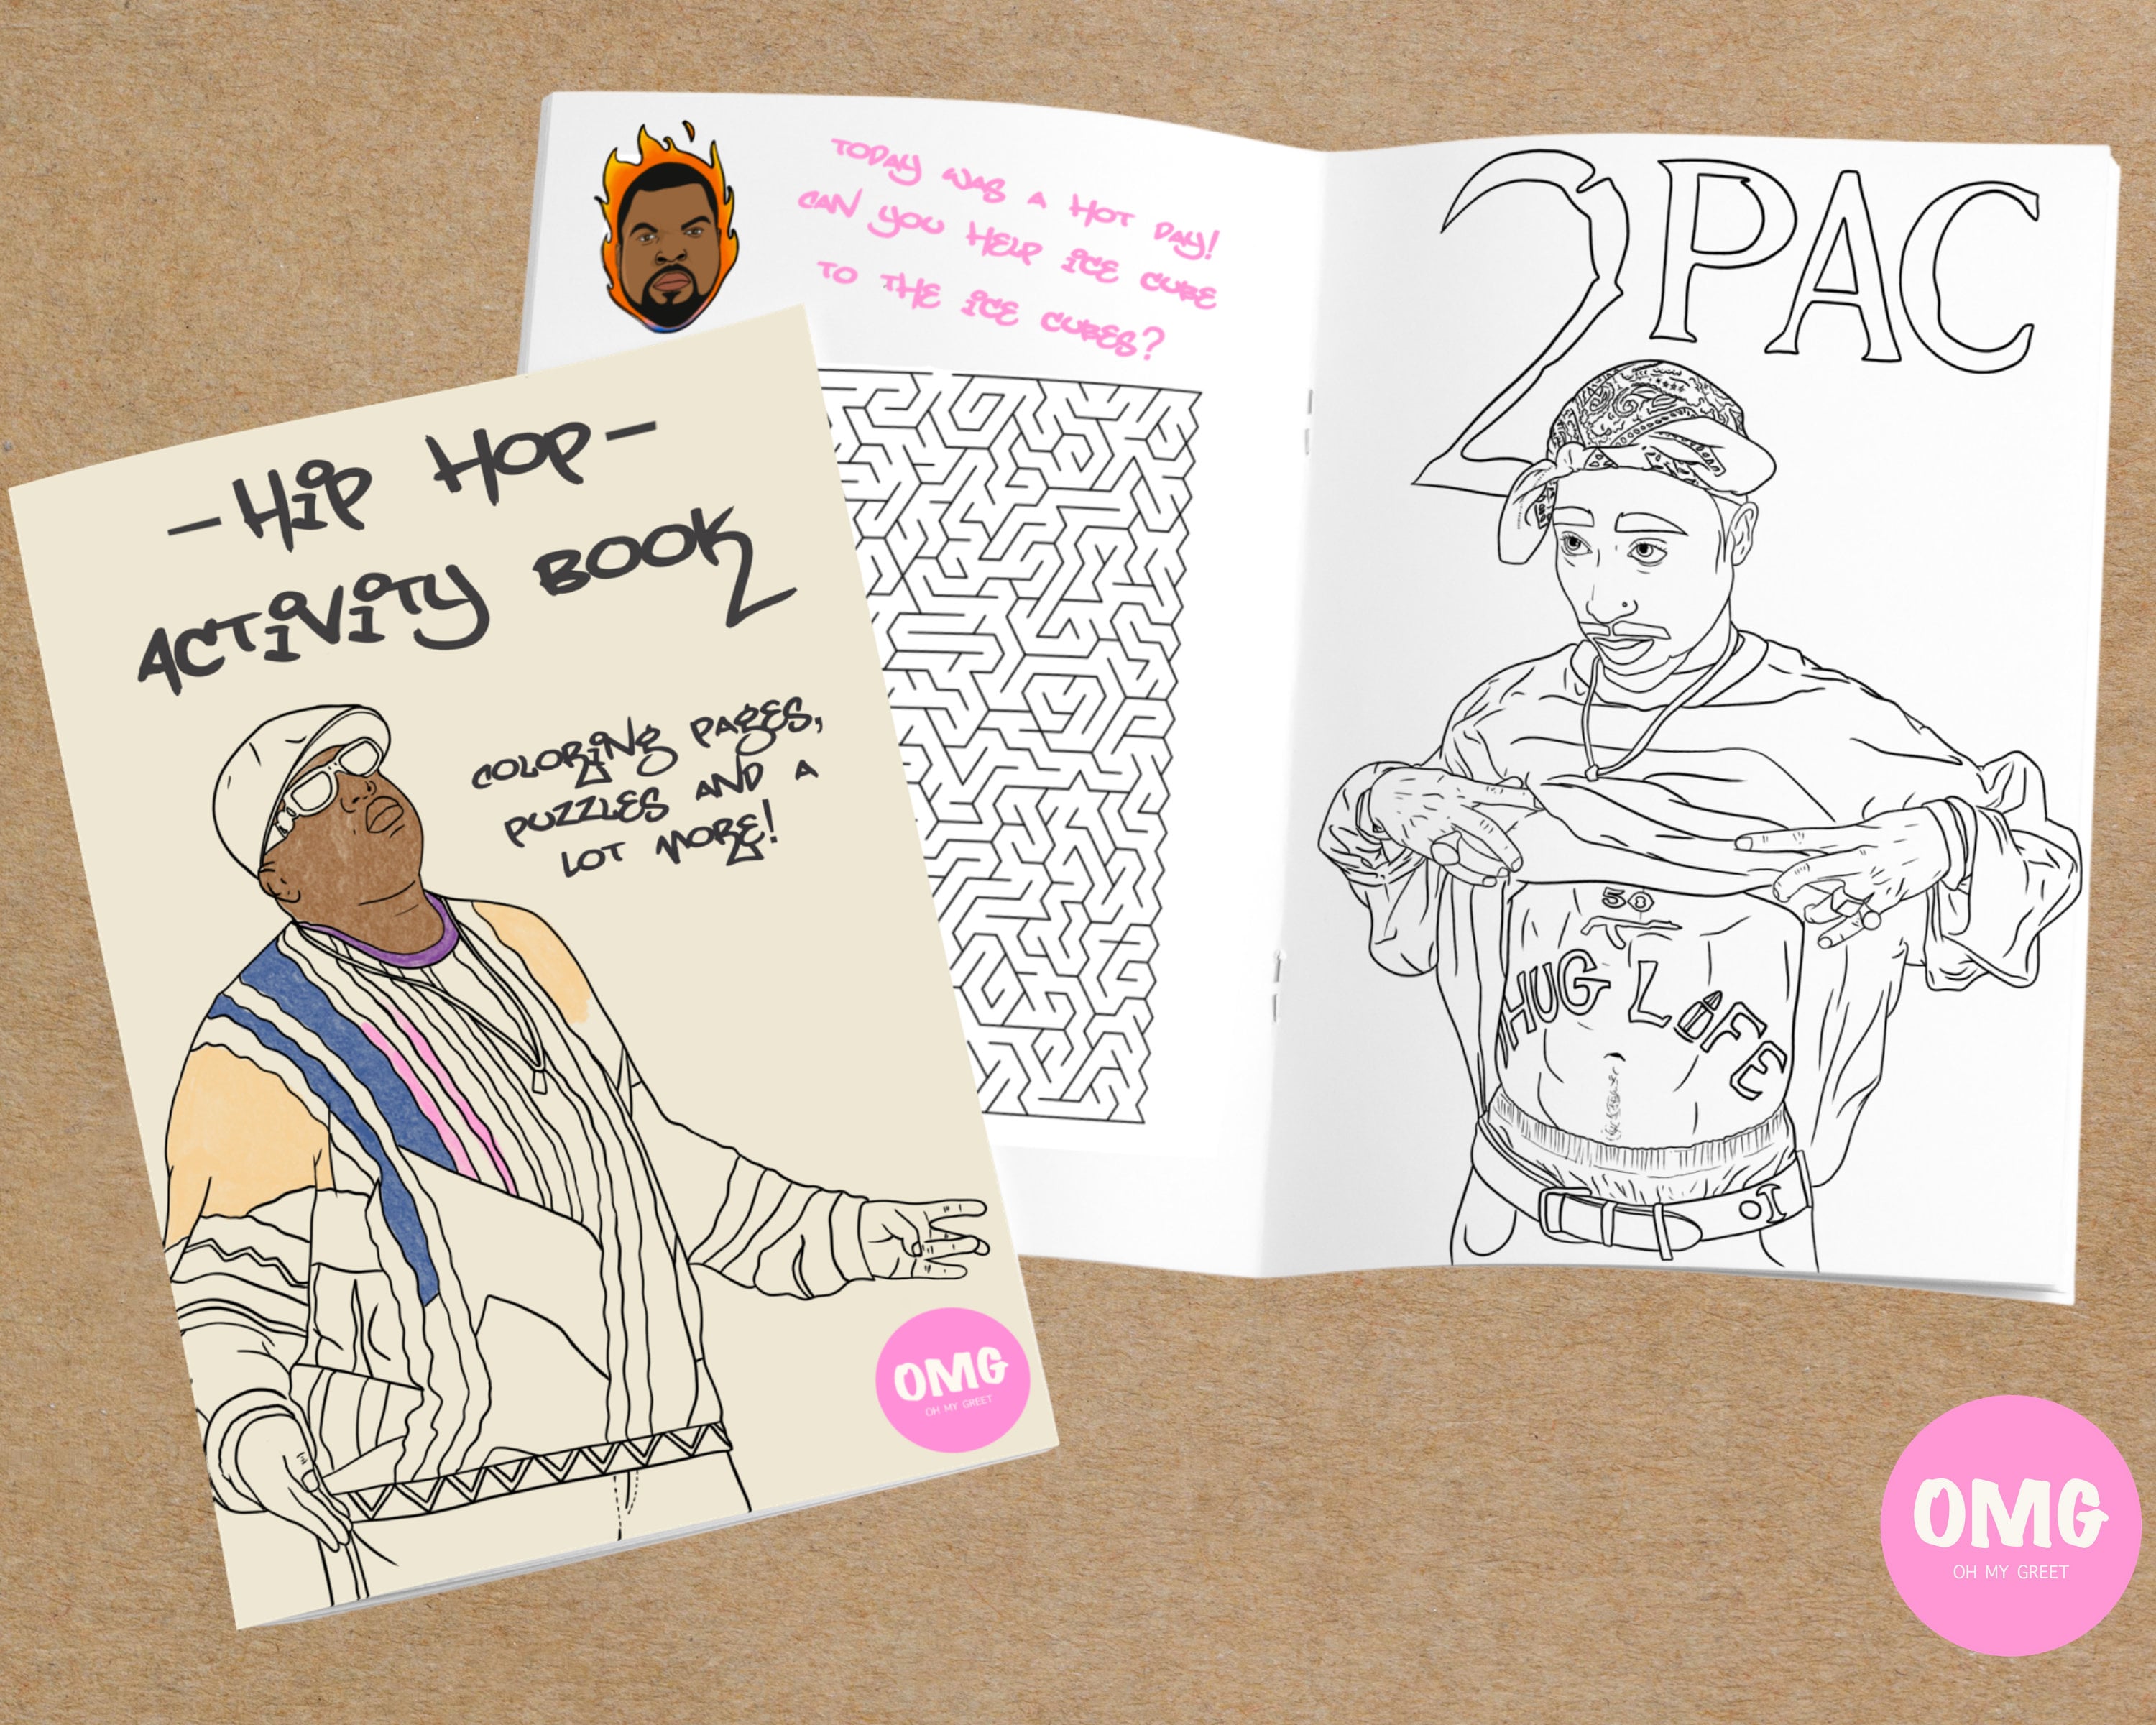 Hip hop activity book coloring book big pac eminem snoop dogg dr dre eazy e ice cube rapper gift hip hop gift